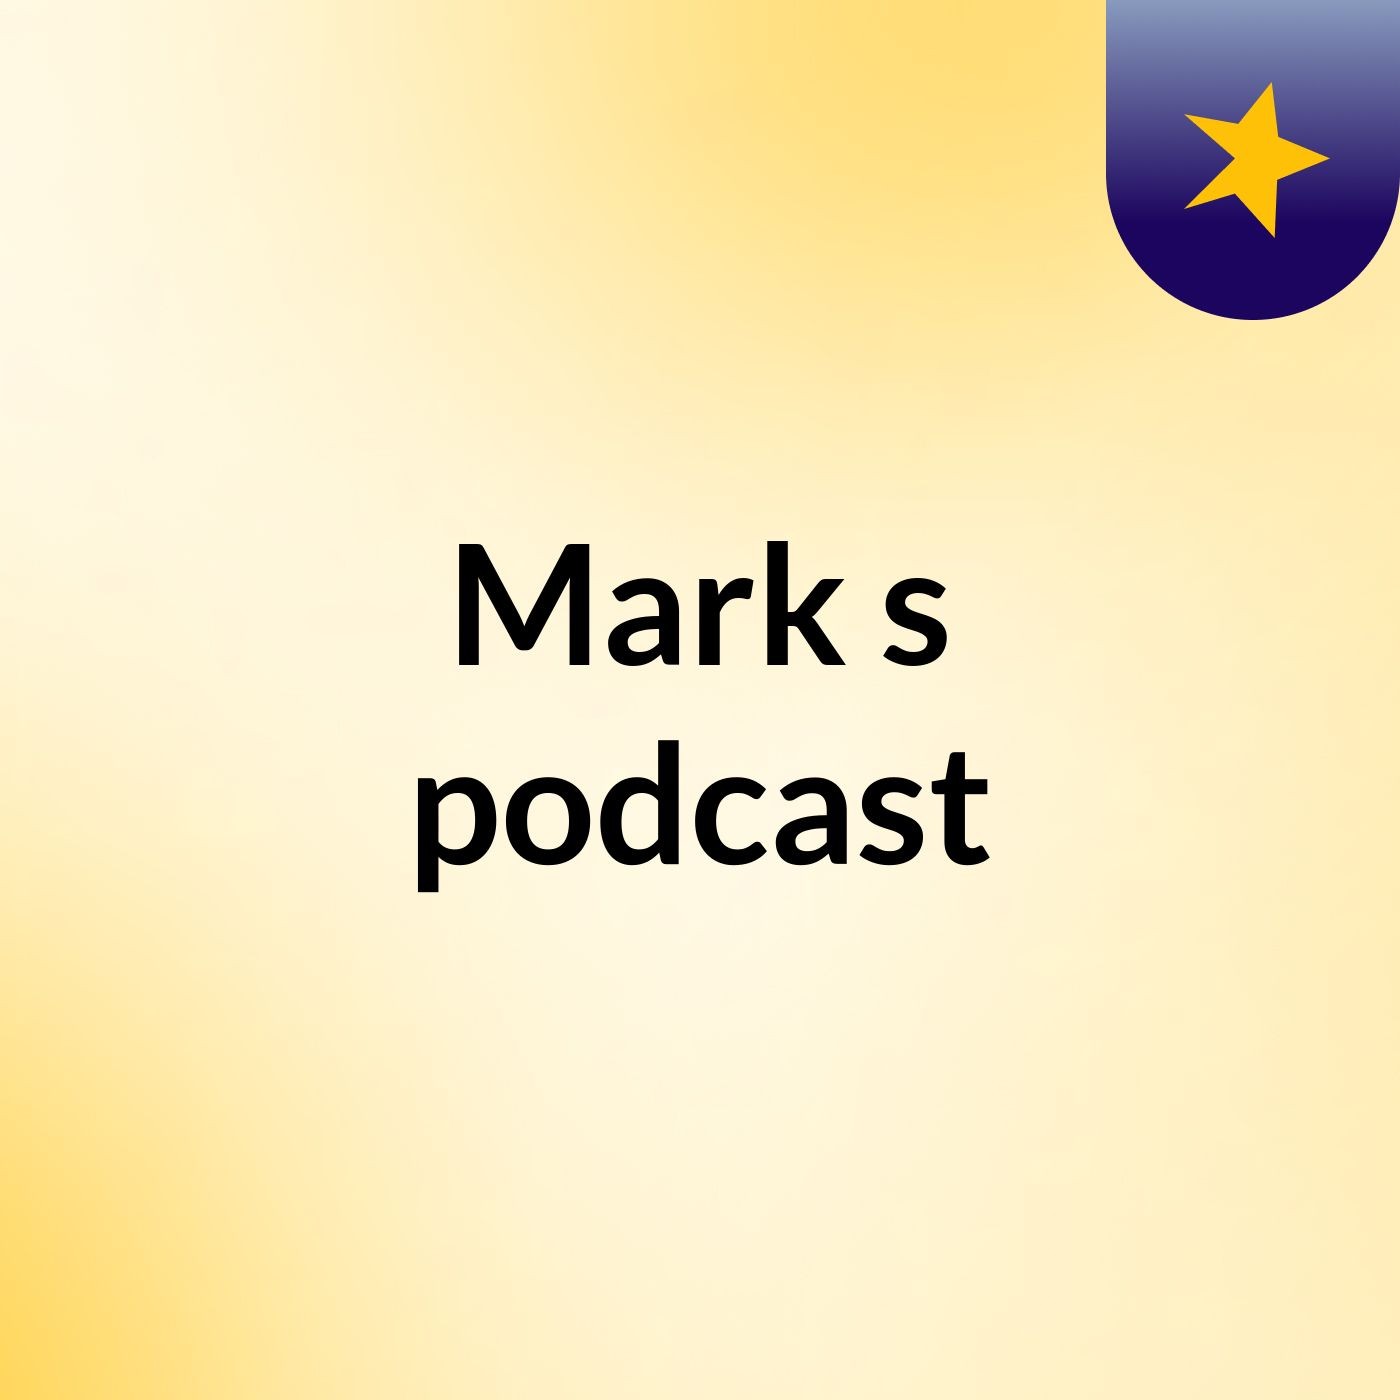 Episode 2 - Mark's podcast